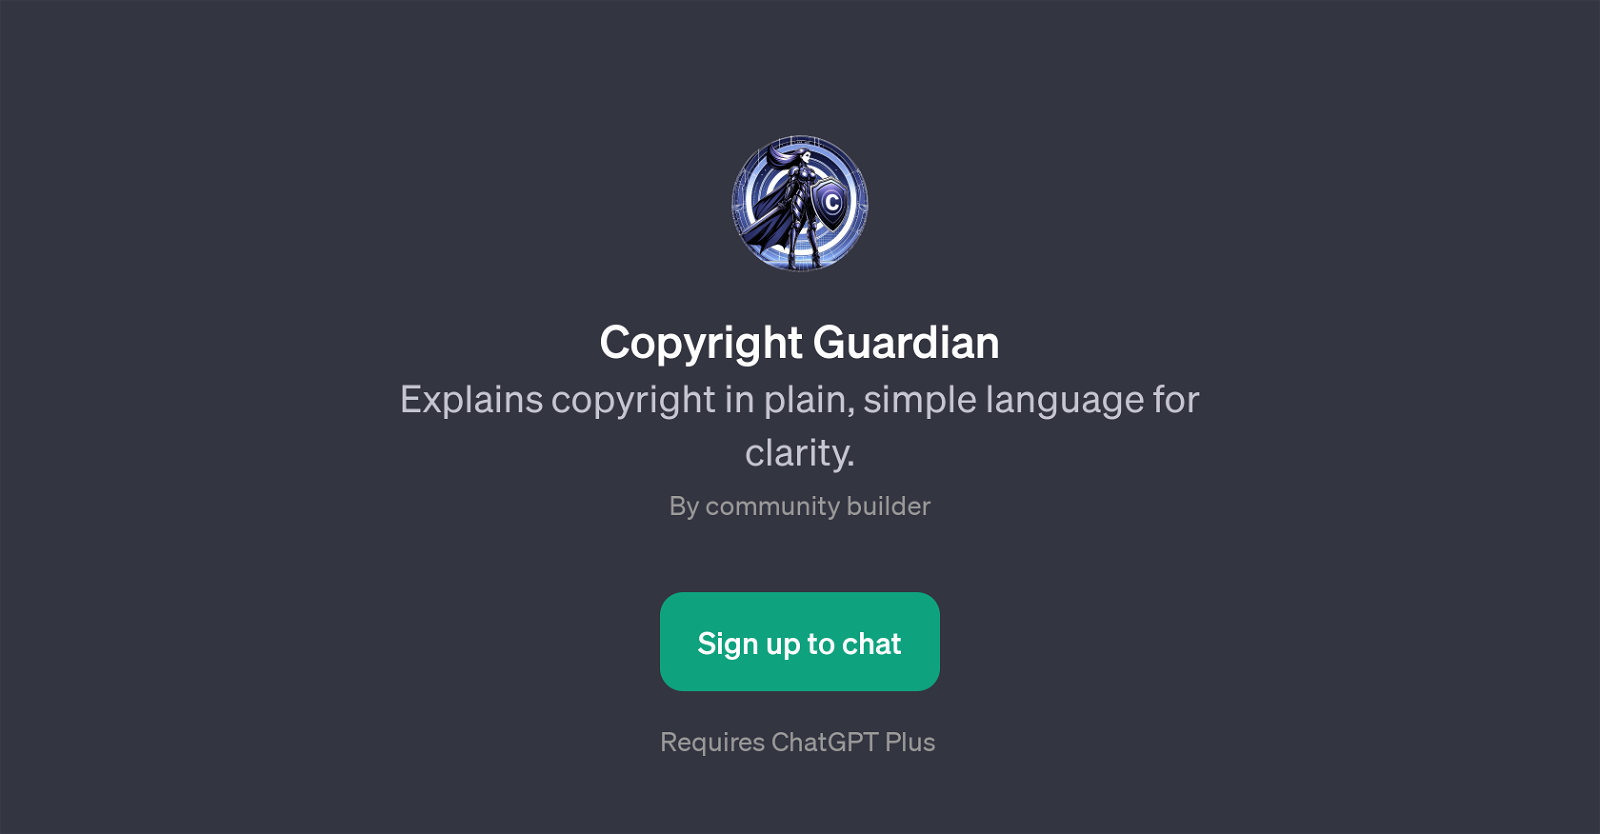 Copyright Guardian website